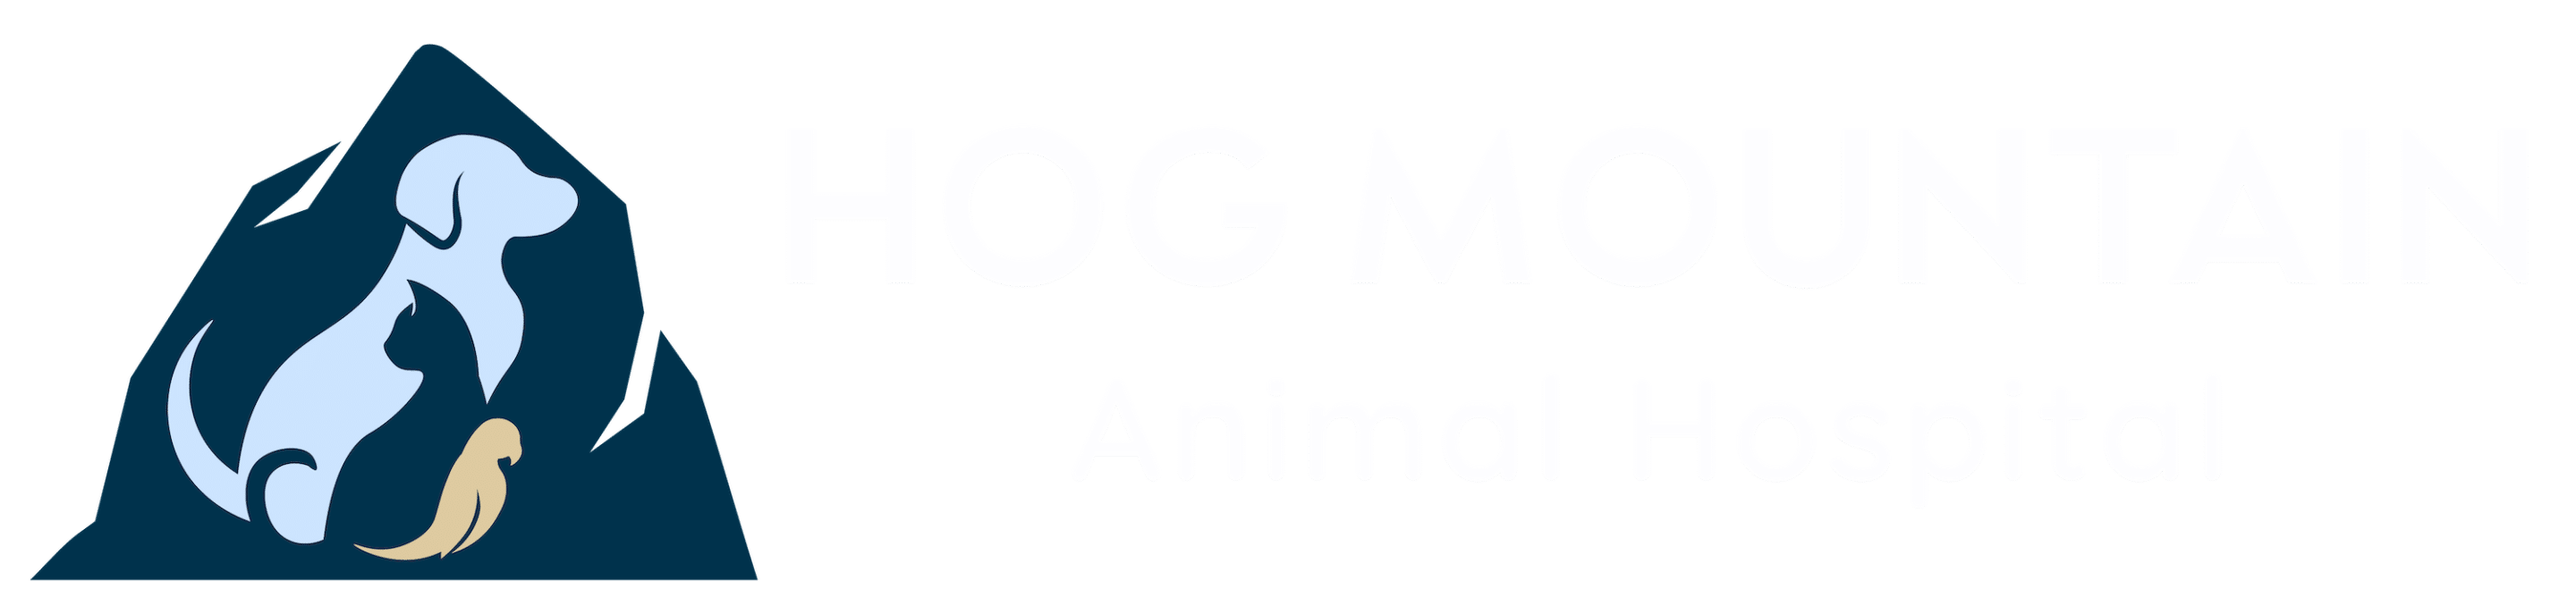 Hog Mountain Animal Hospital Logo